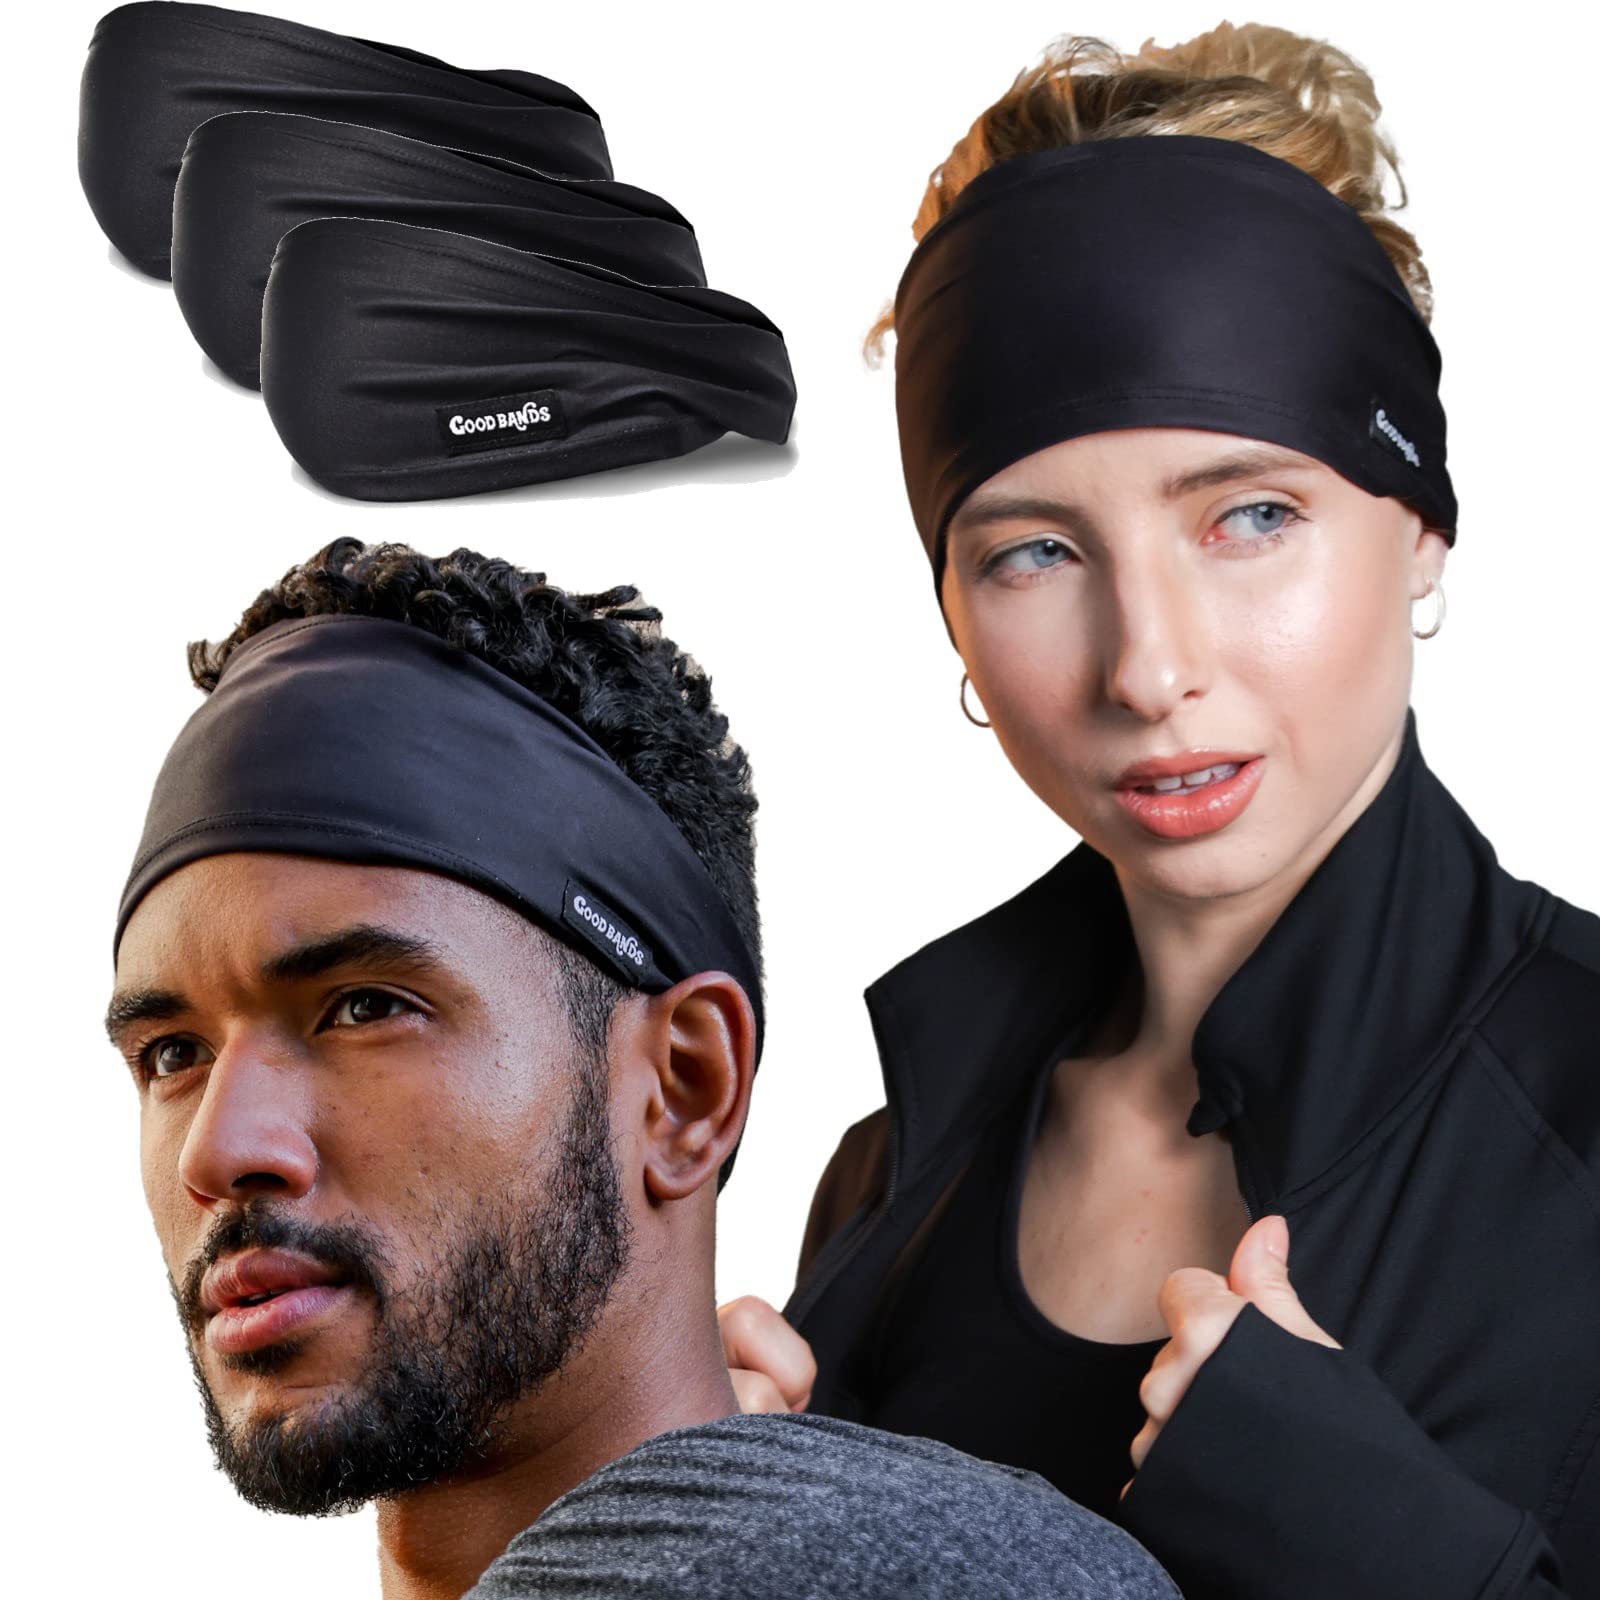 Sweatband for Men and Women - Unisex Headband That Wicks Moisture